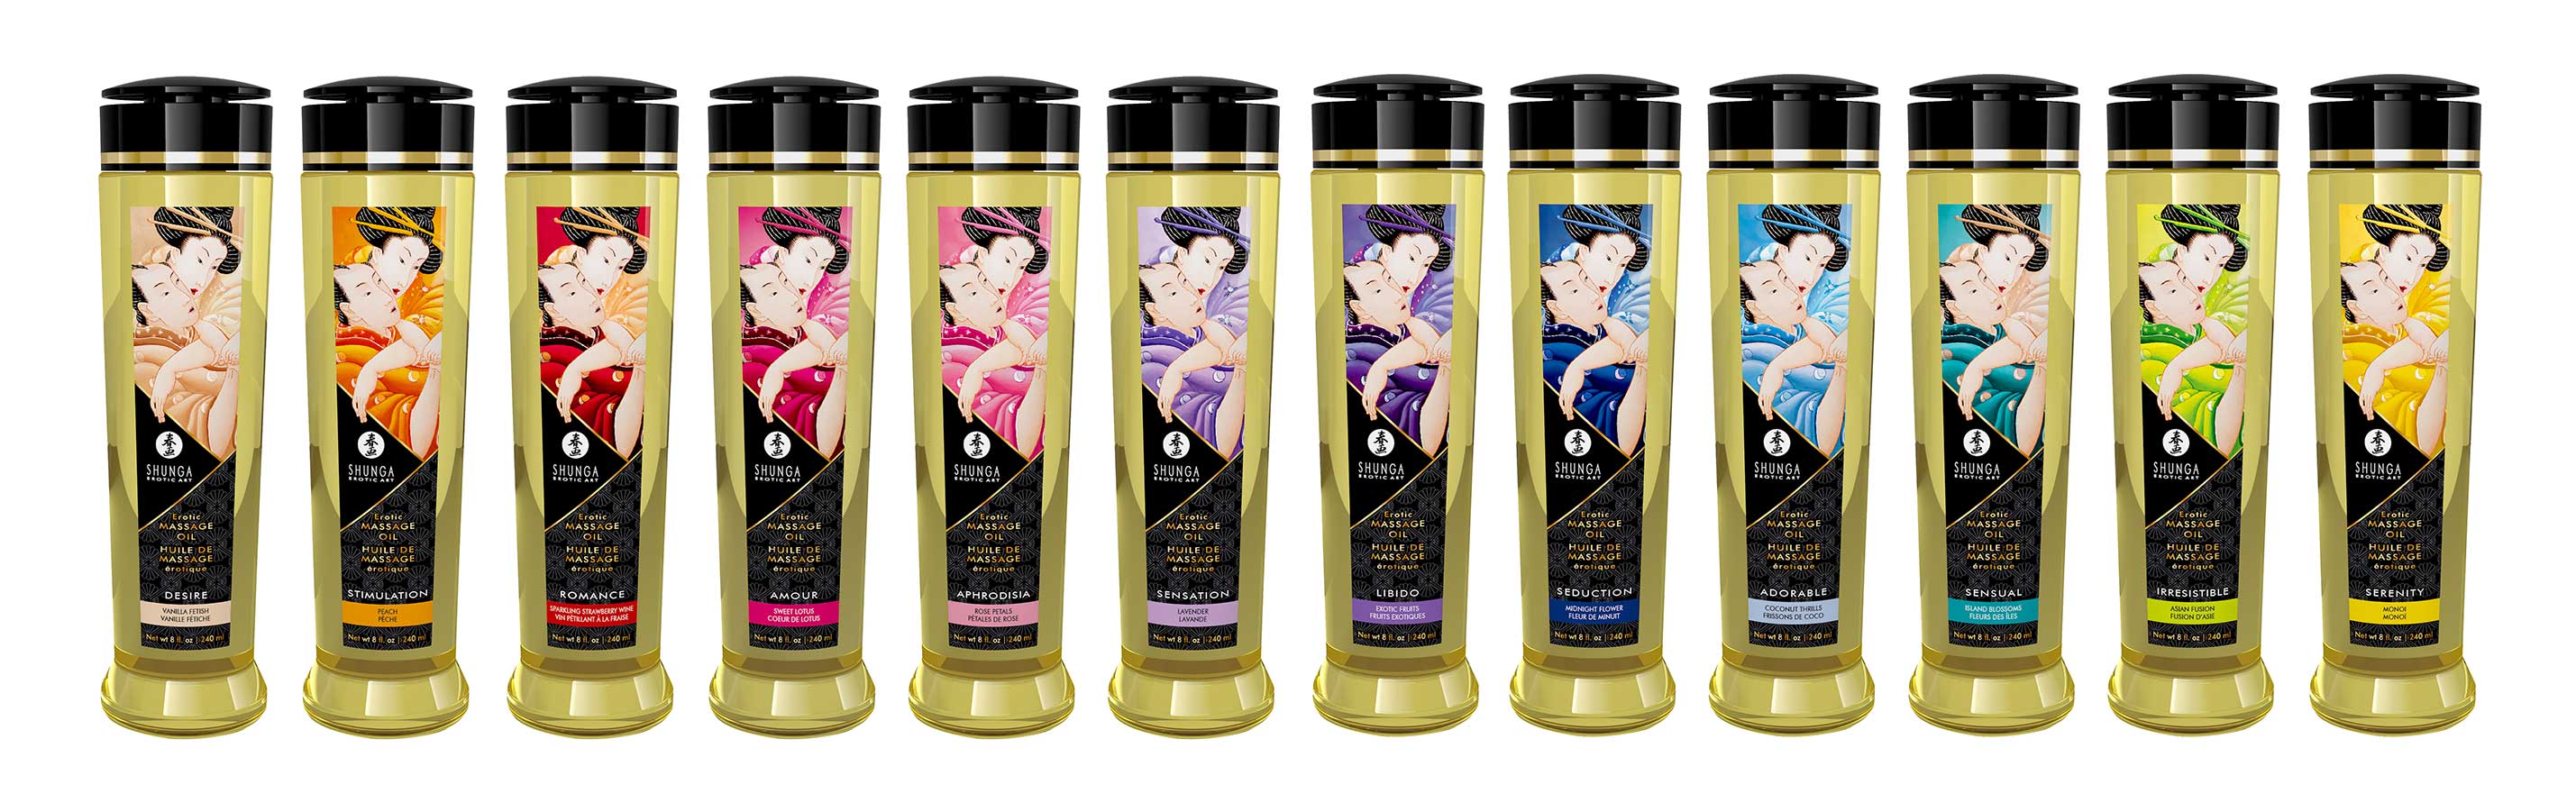 12 new massage oils from Shunga